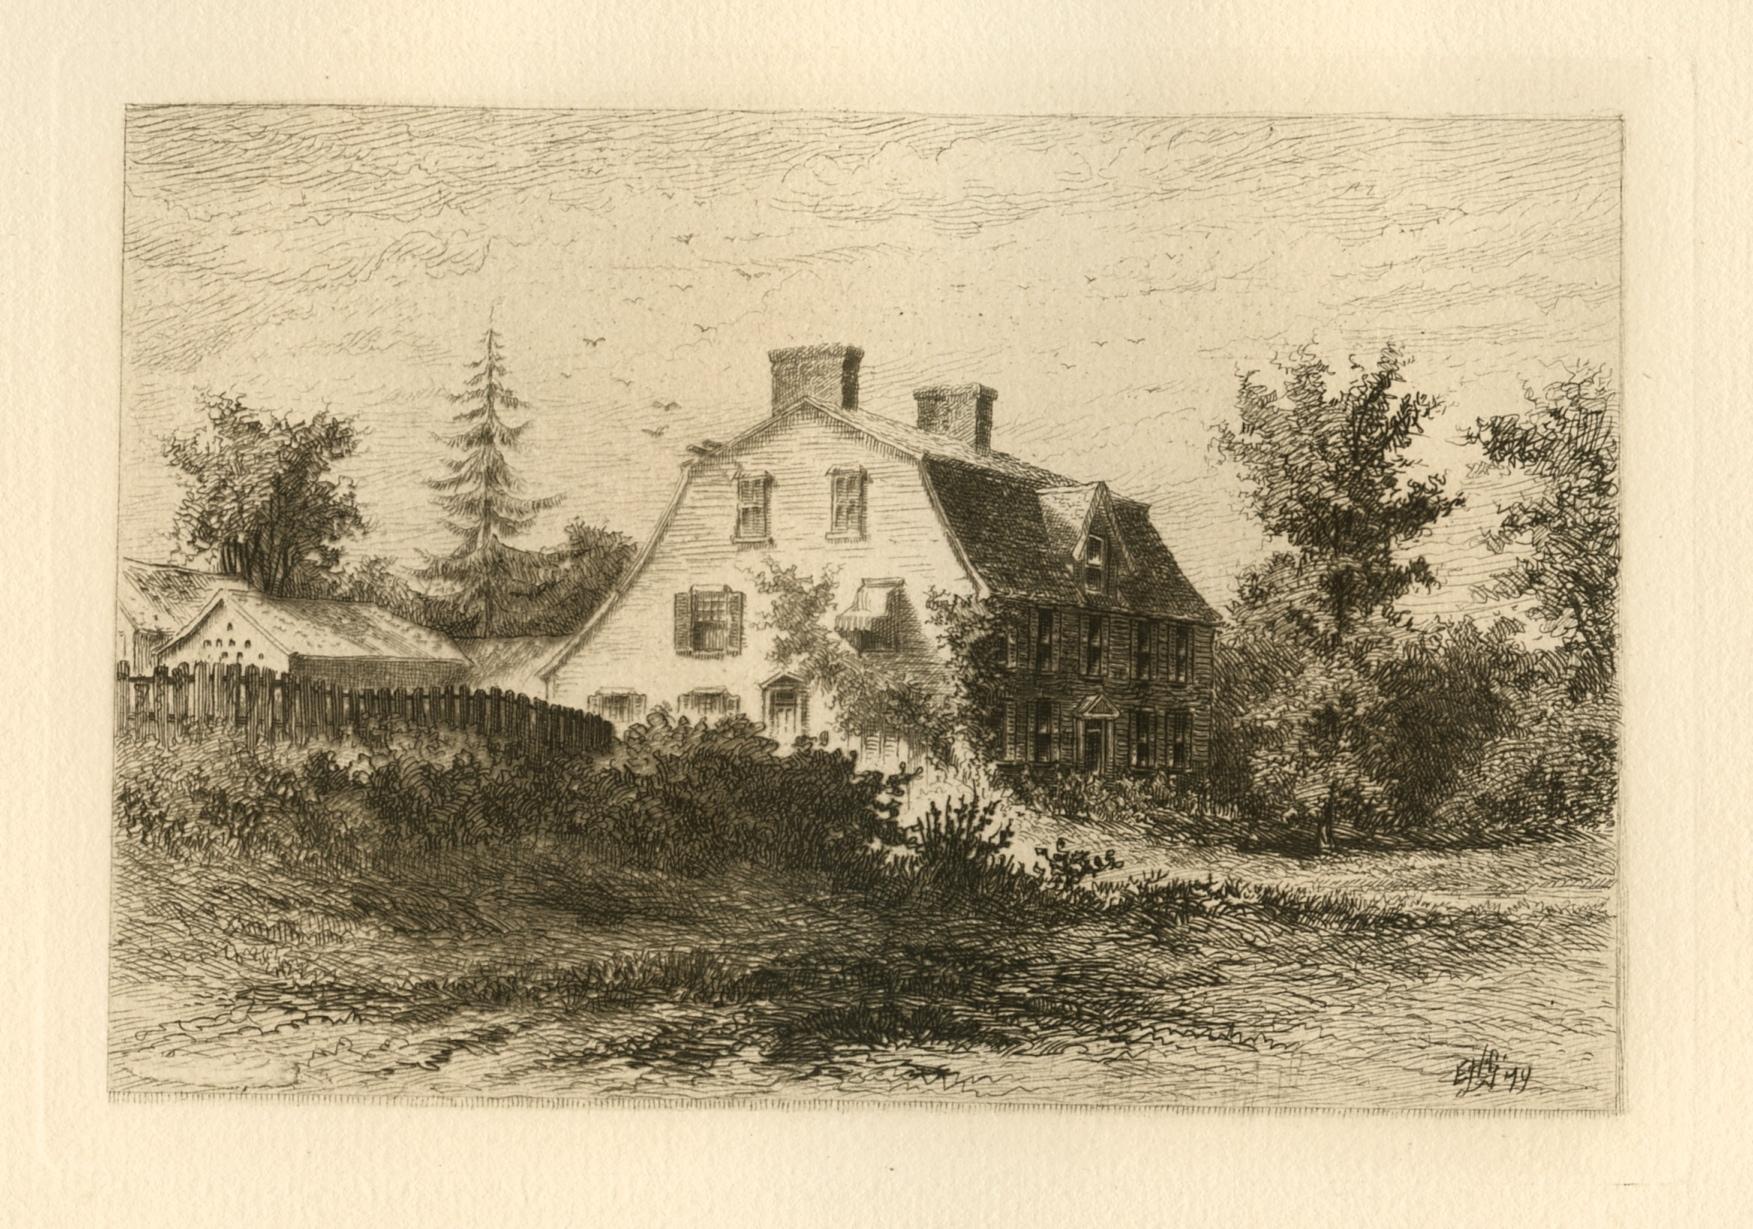 "Home of Nathaniel Hawthorne" original etching - Print by Edmund Garrett